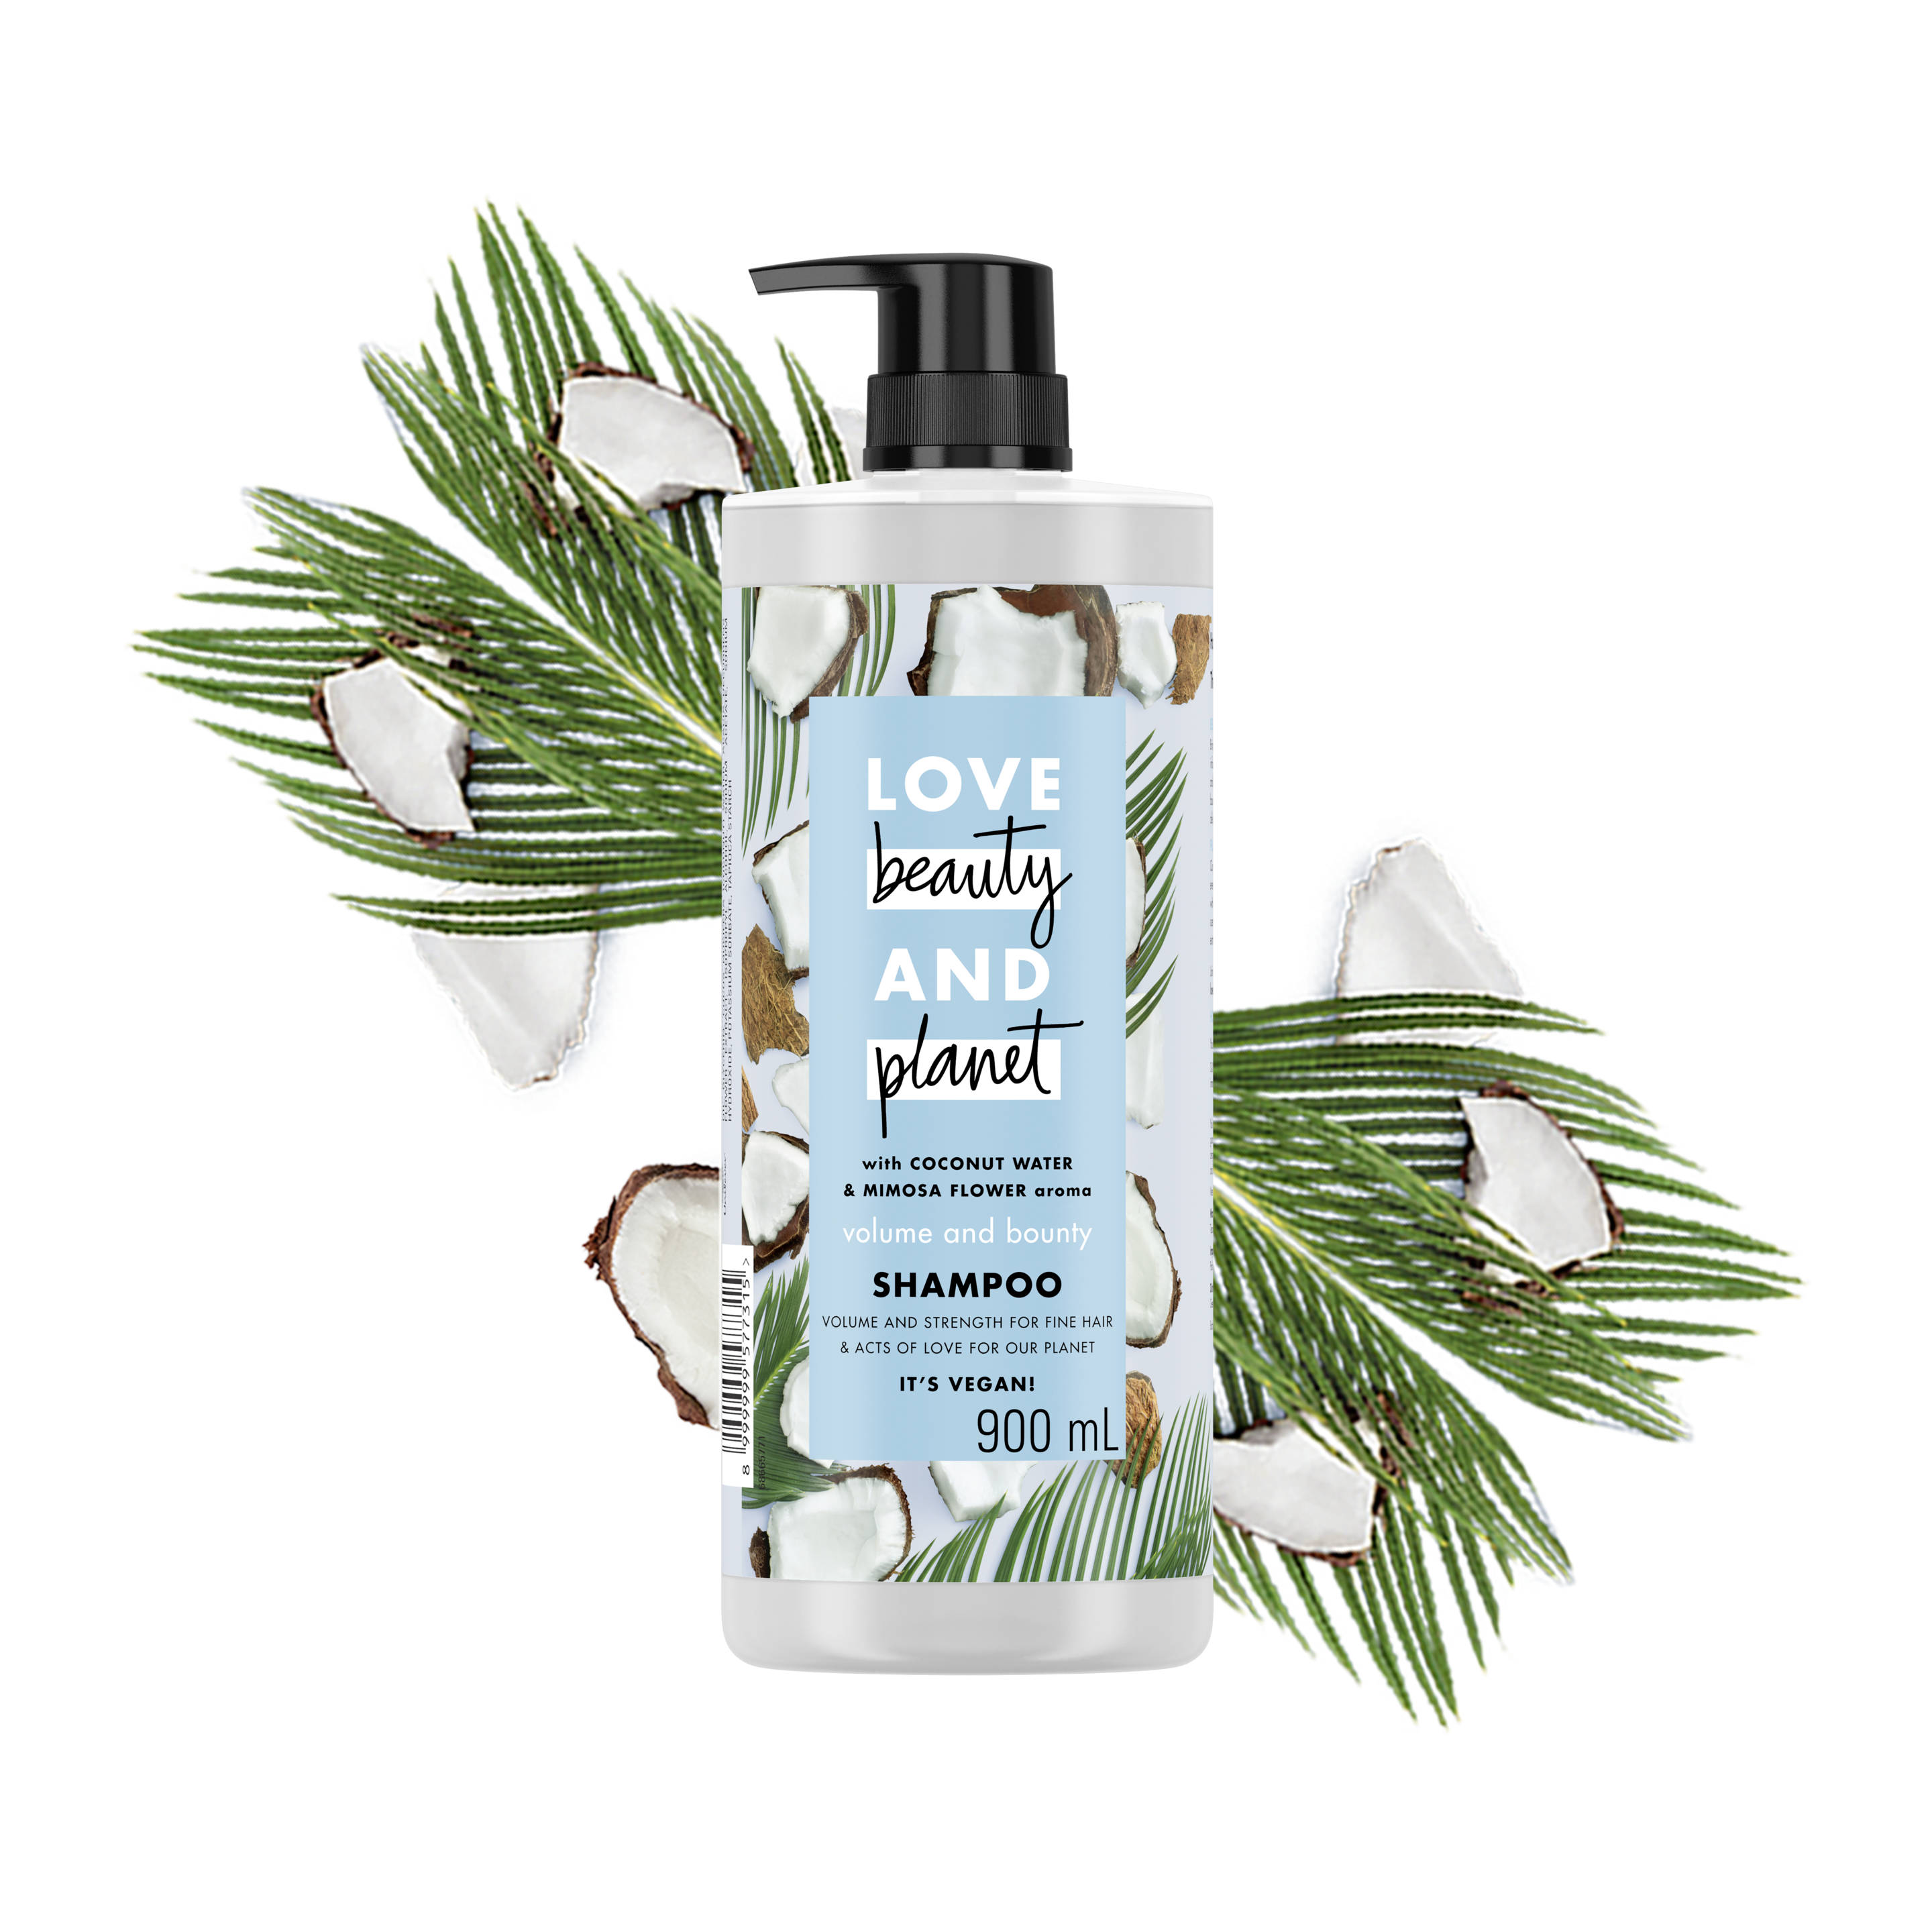 Tampak depan kemasan Love Beauty and Planet Coconut Water & Mimosa Flower Shampoo ukuran 900 ml Text